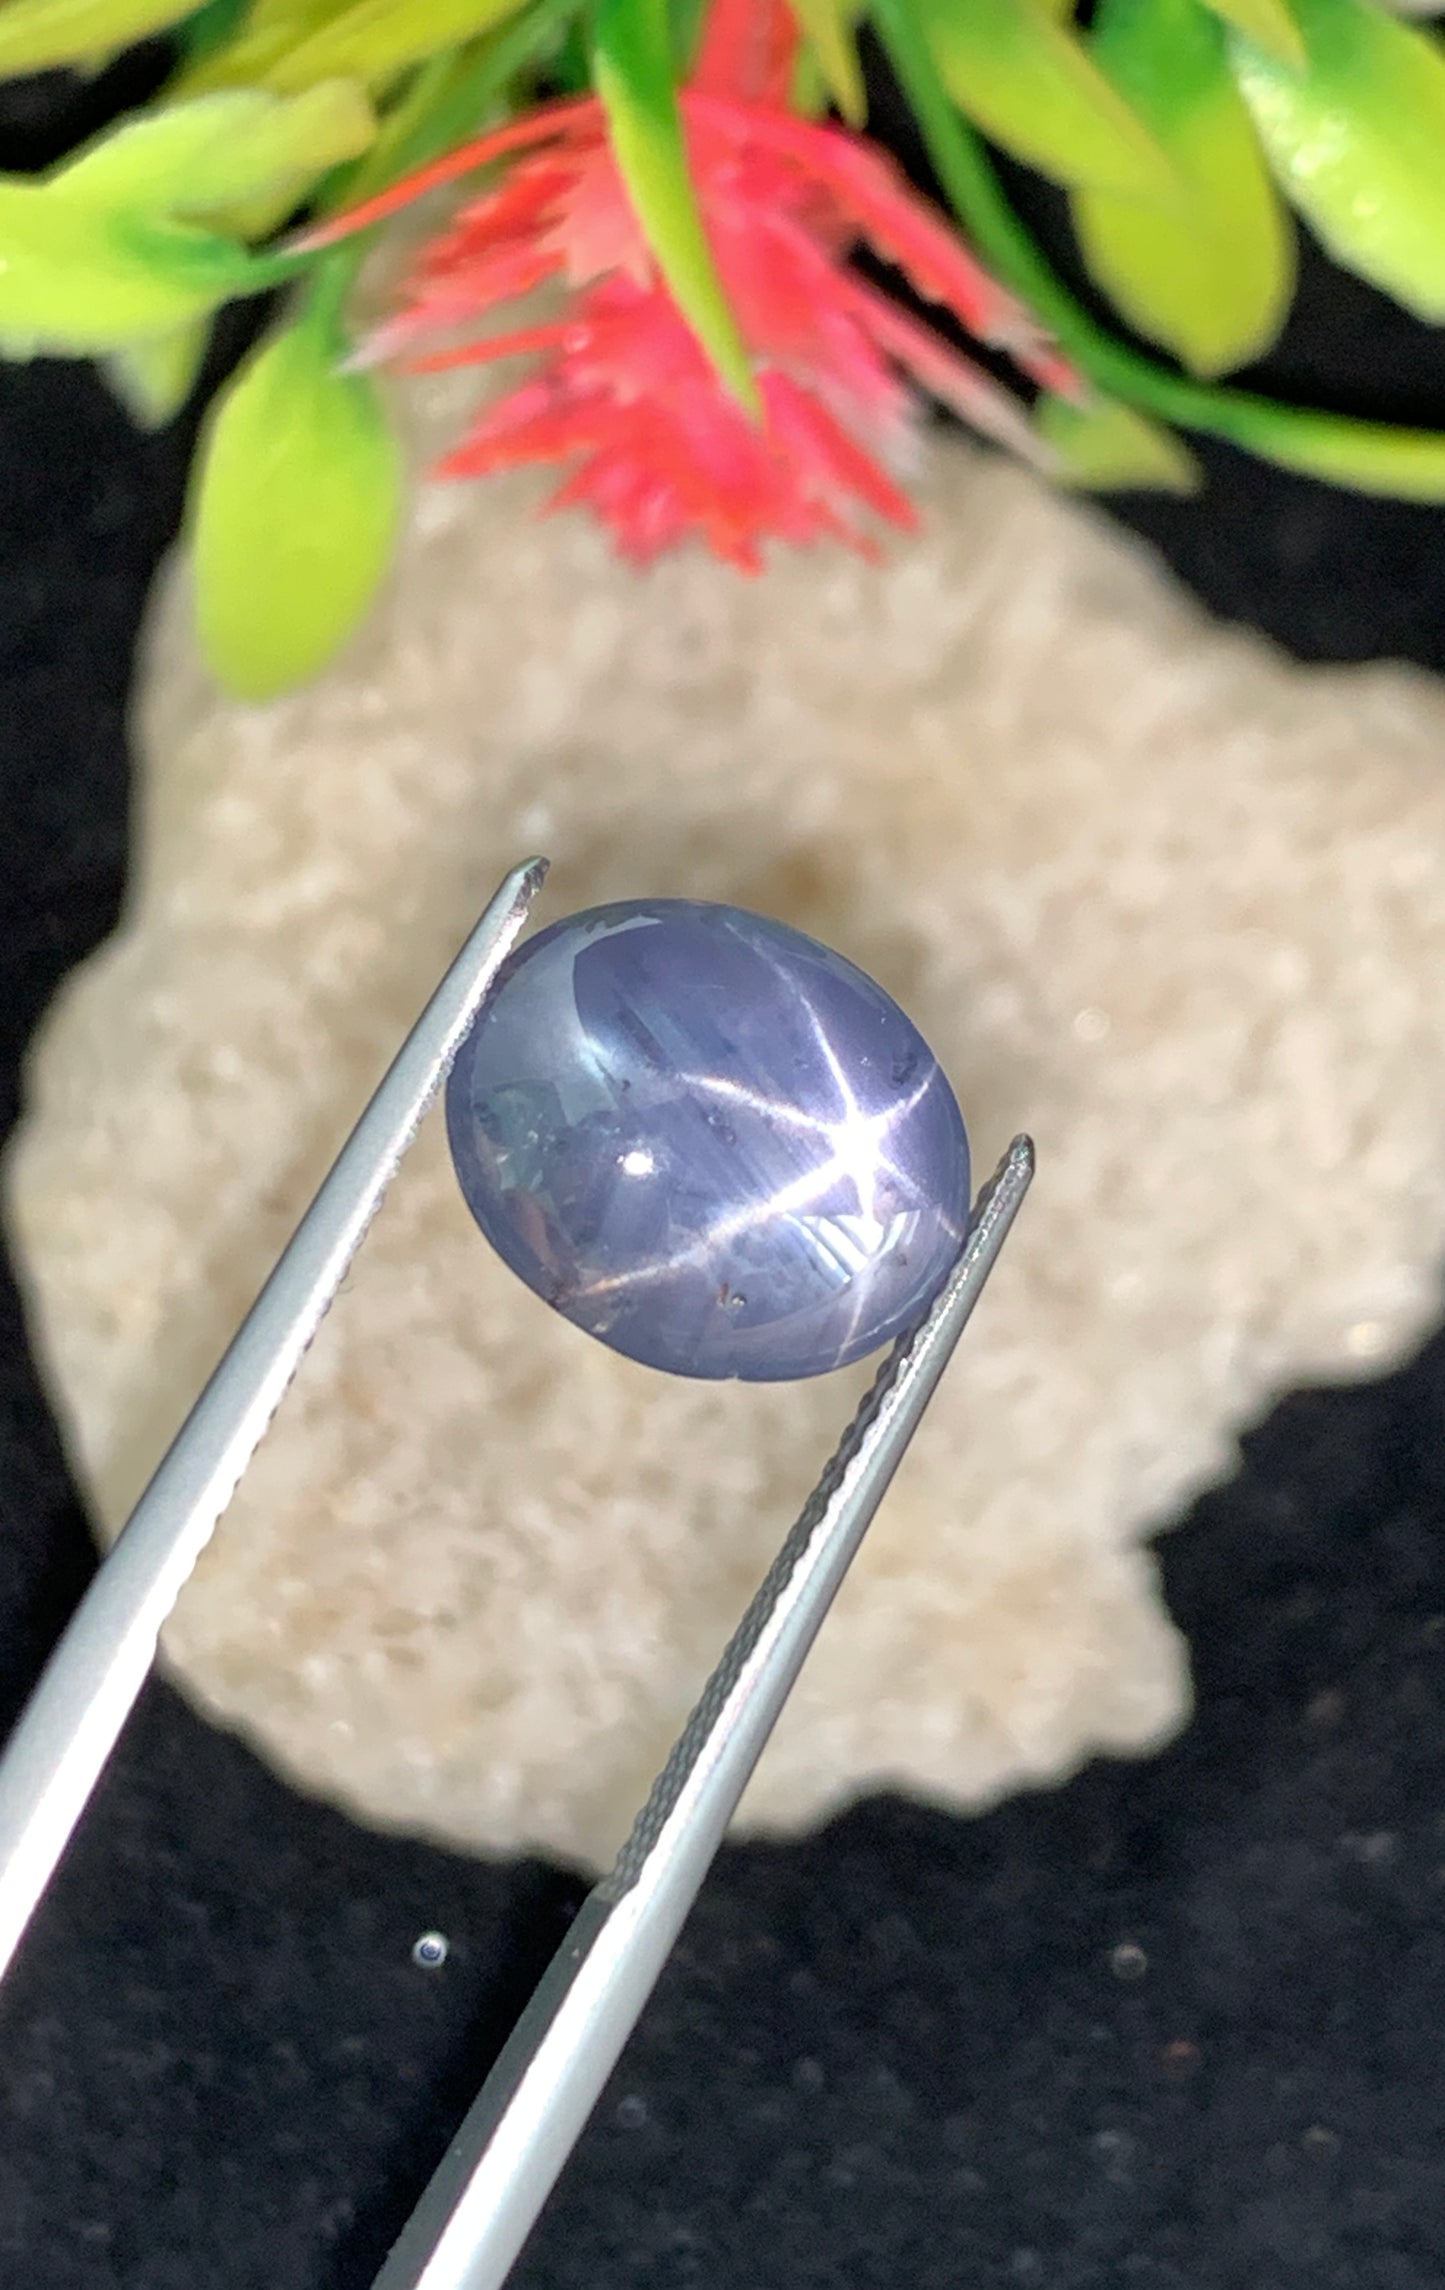 9.85 cts Unheated Star Sapphire